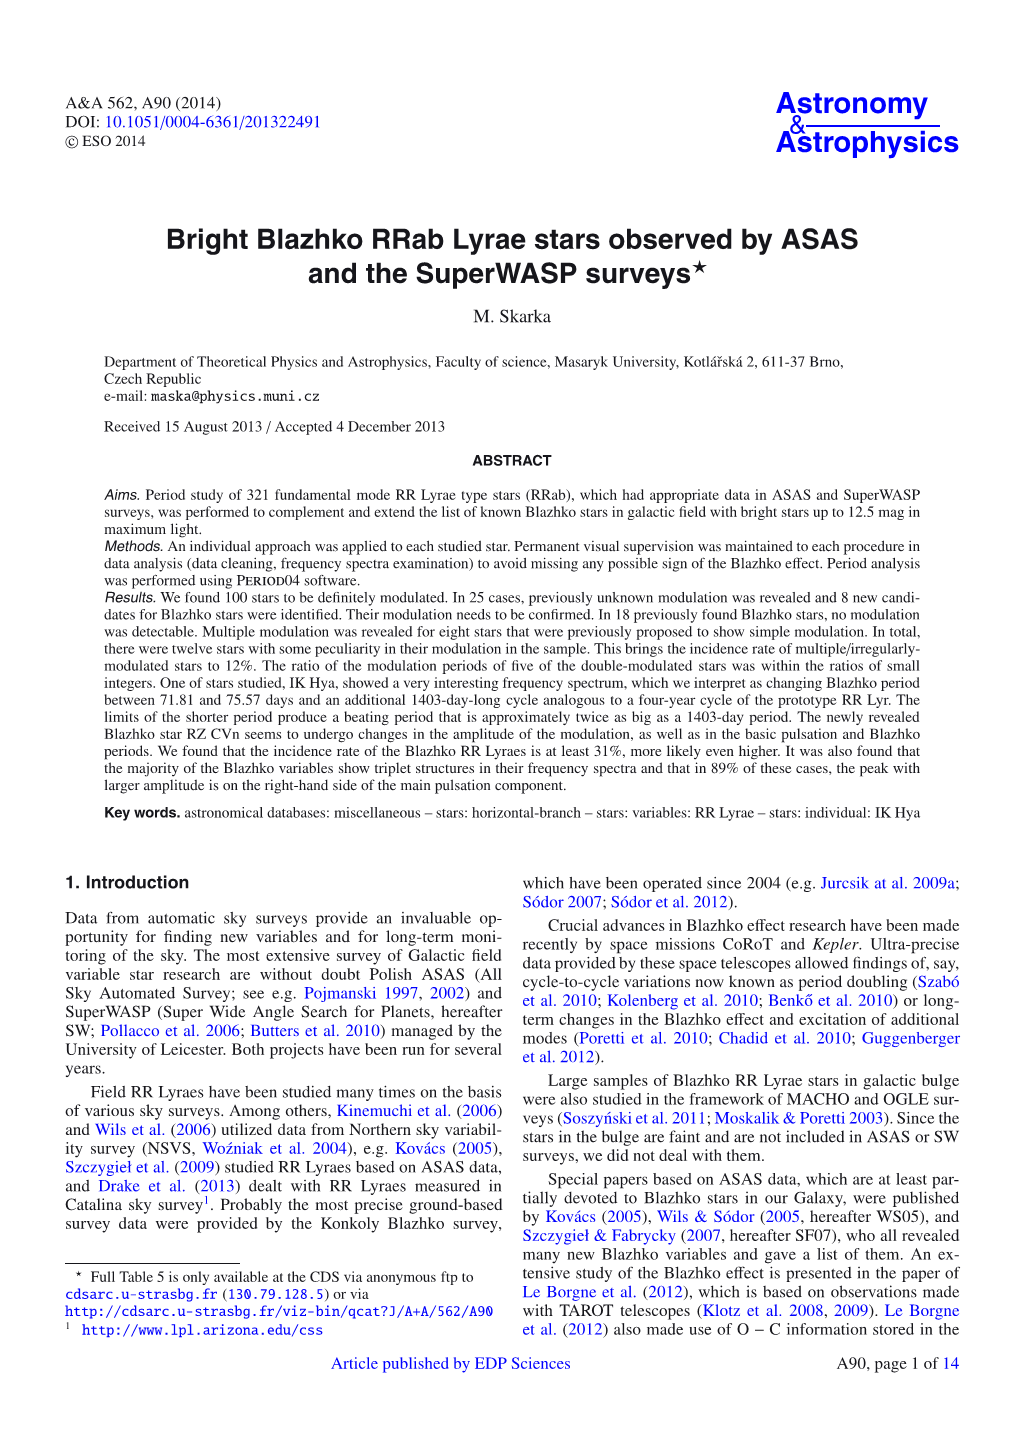 Bright Blazhko Rrab Lyrae Stars Observed by ASAS and the Superwasp Surveys